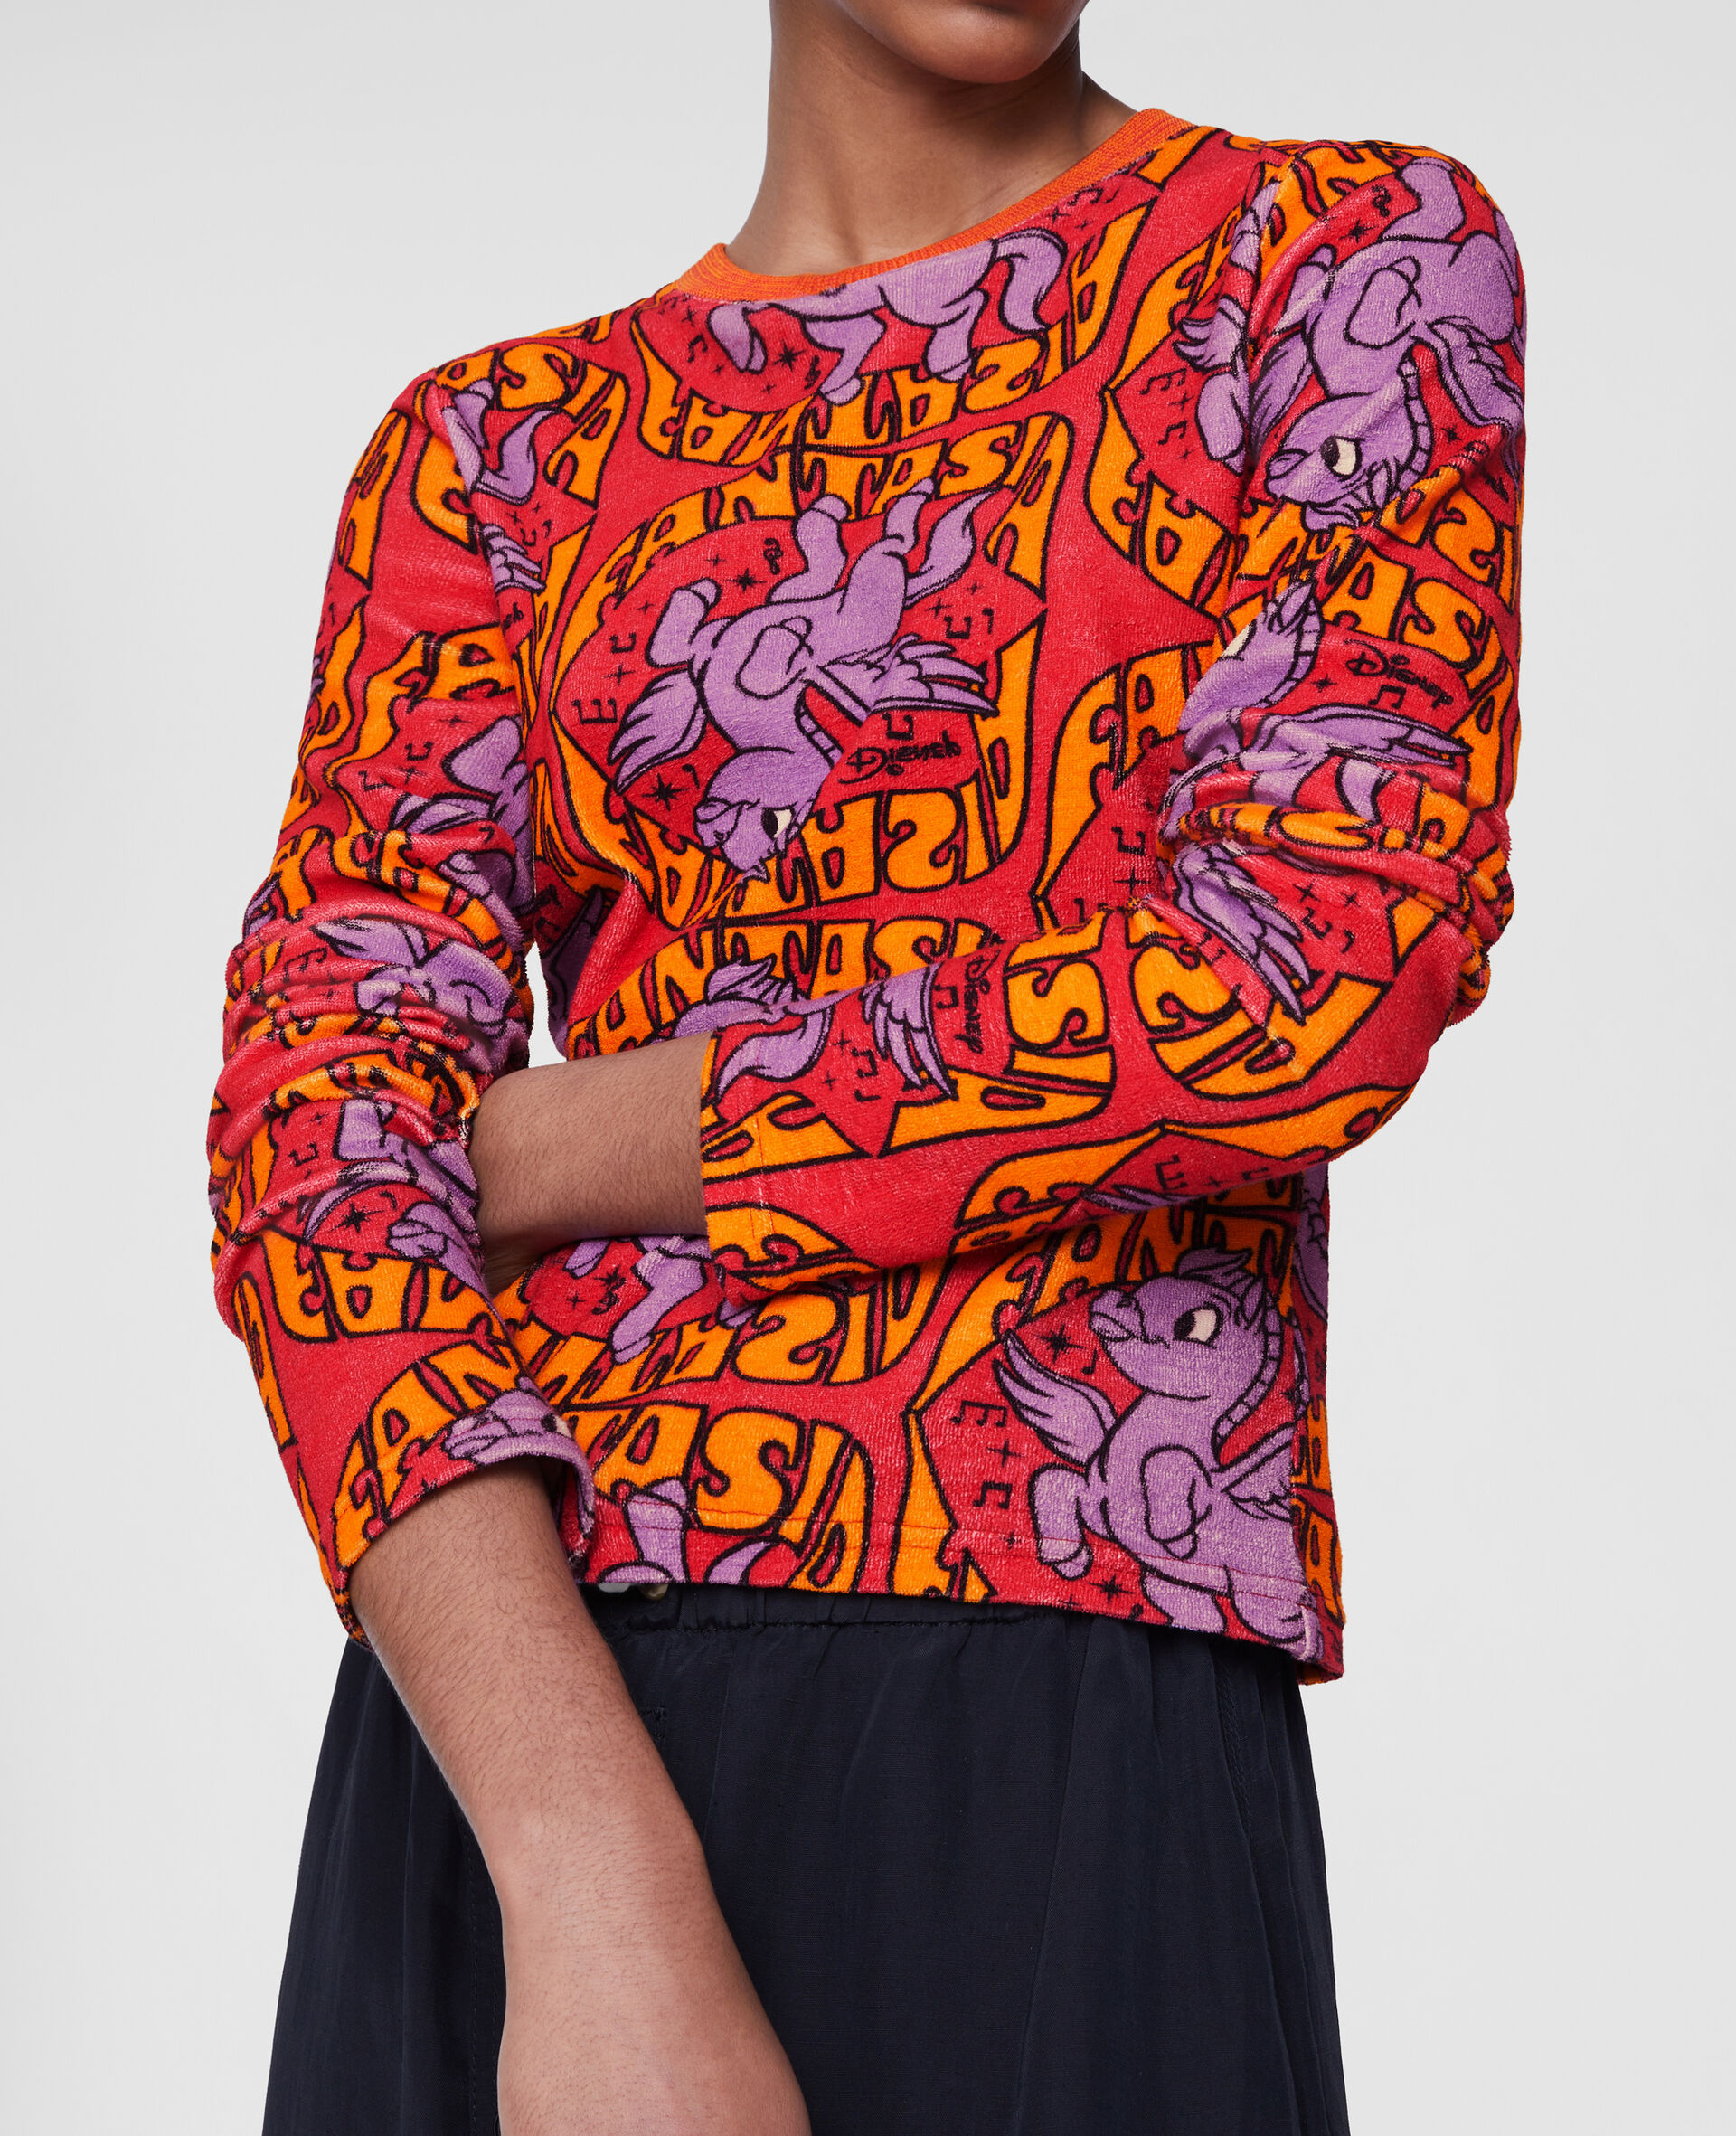 Fantasia Pegasus Print Cotton T-Shirt-Multicolour-large image number 3